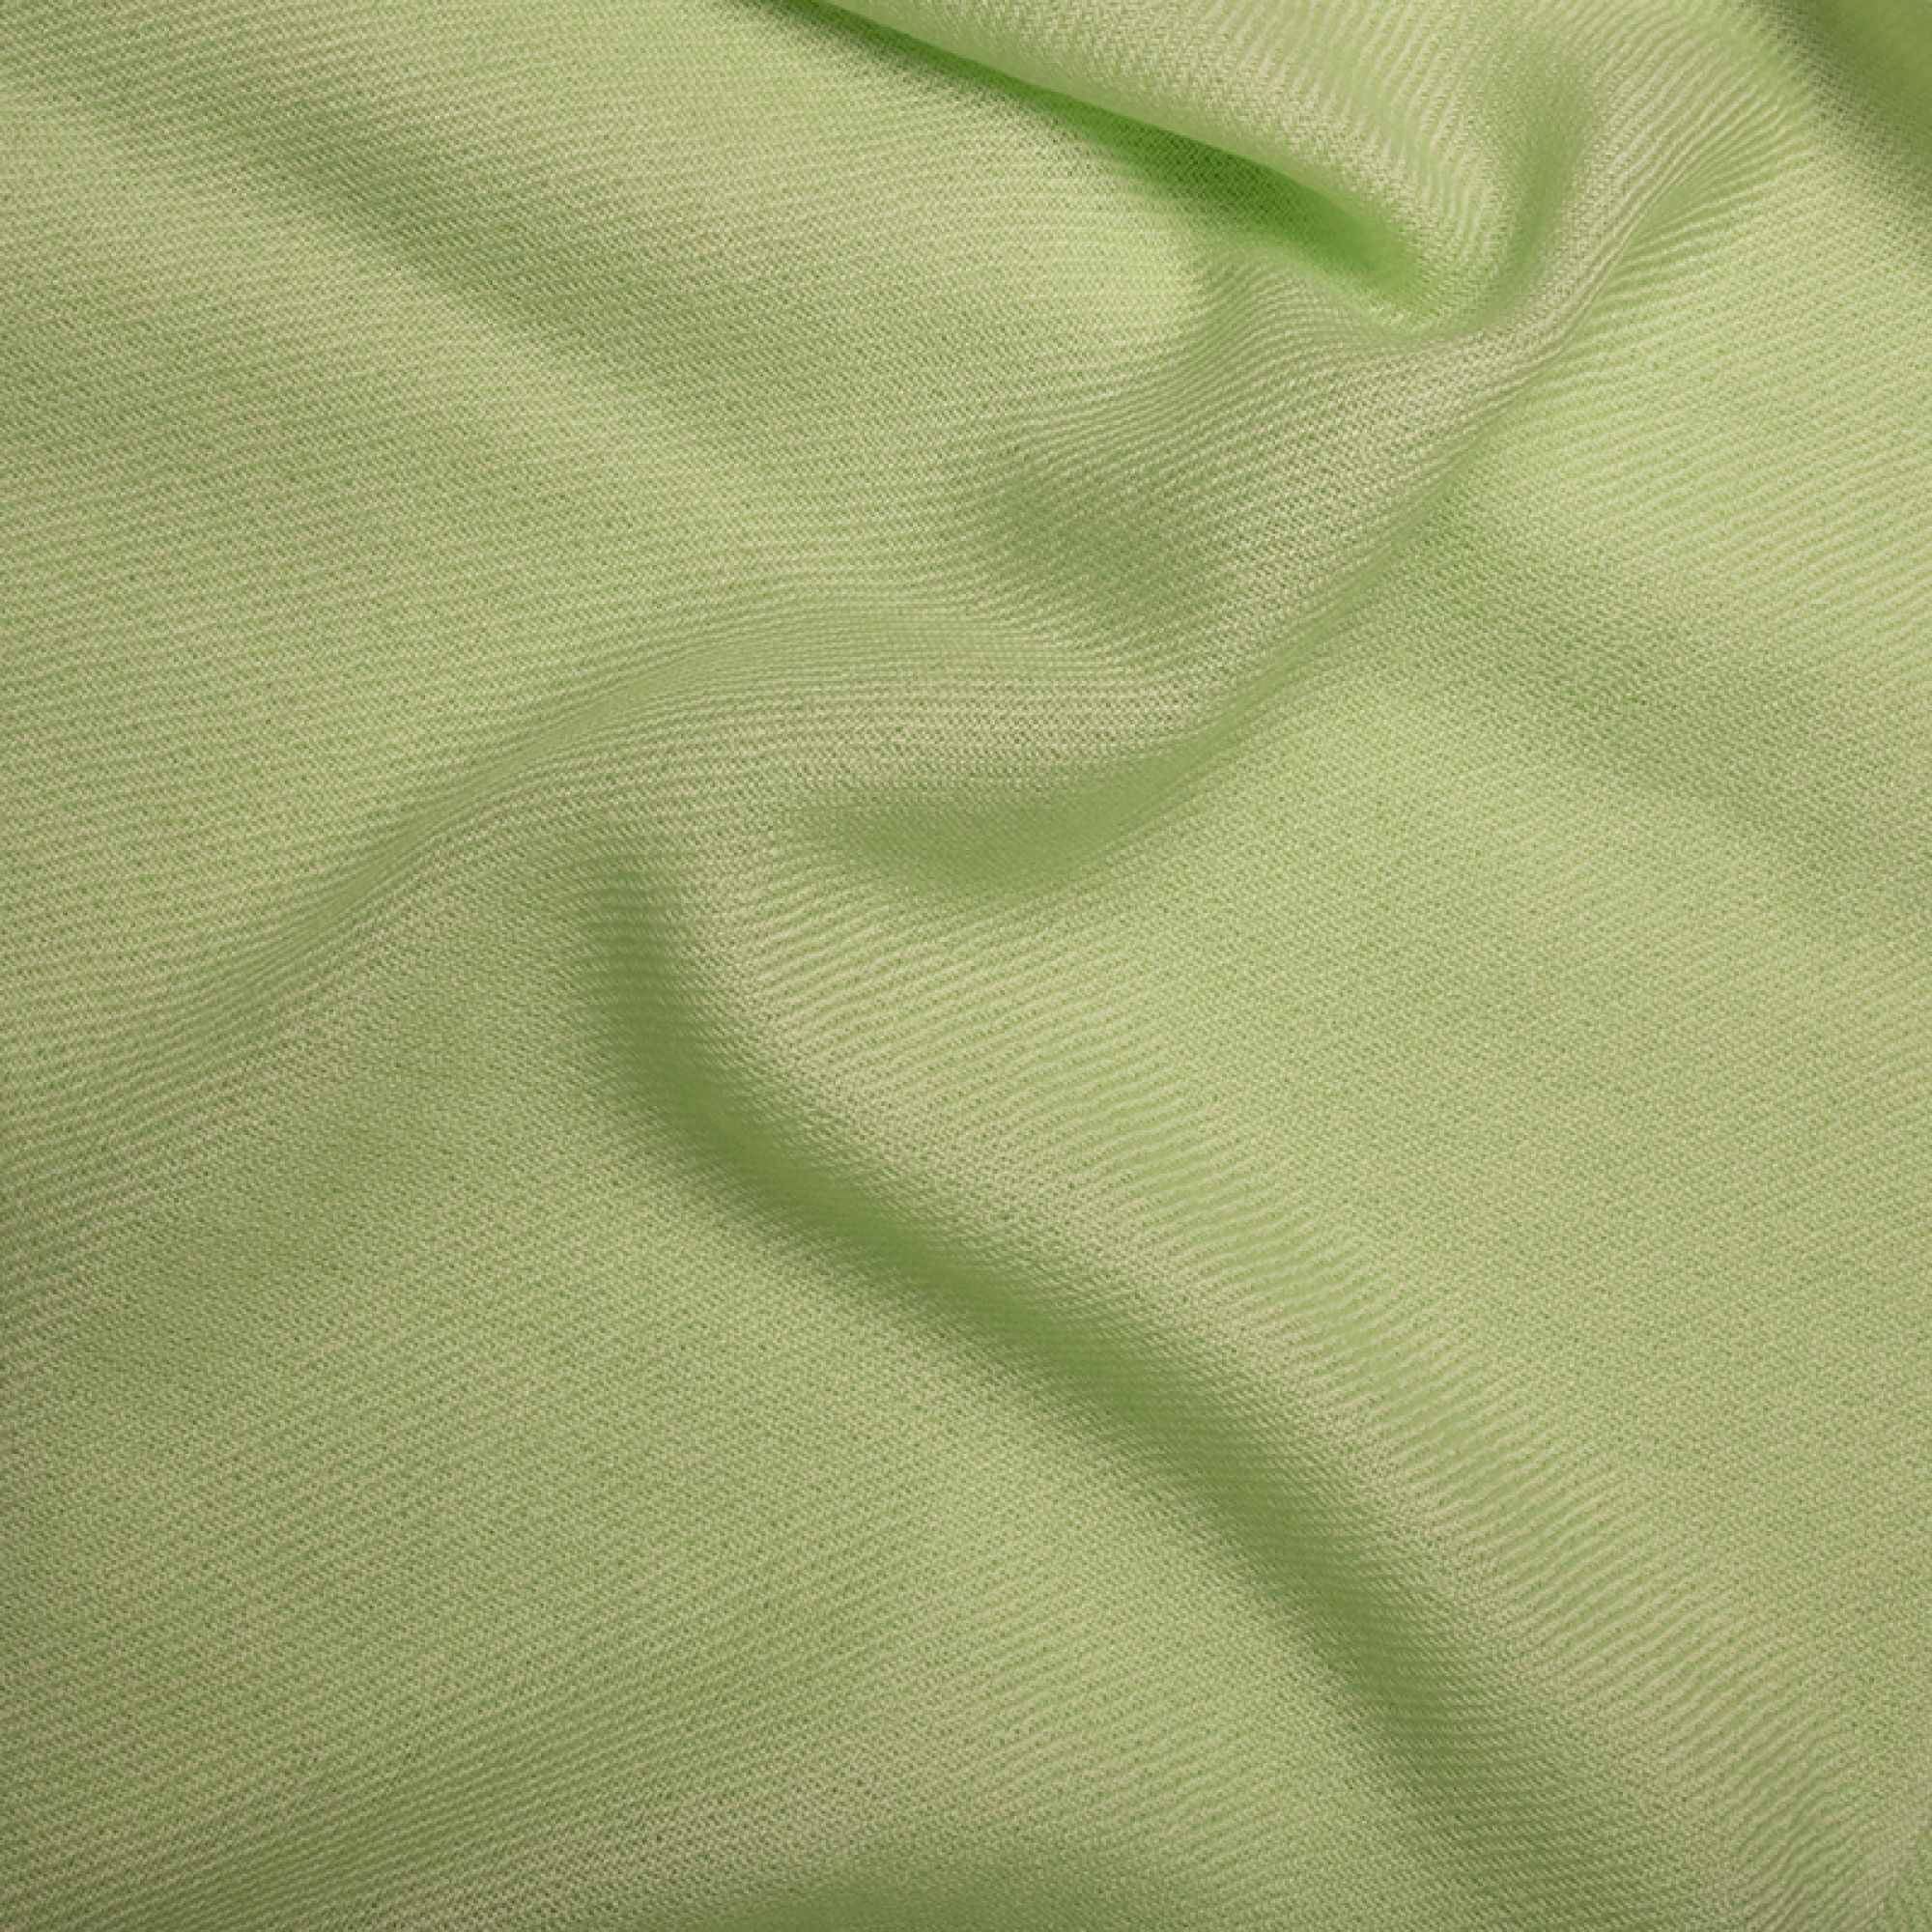 Cachemire pull femme toodoo plain l 220 x 220 vert pale 220x220cm